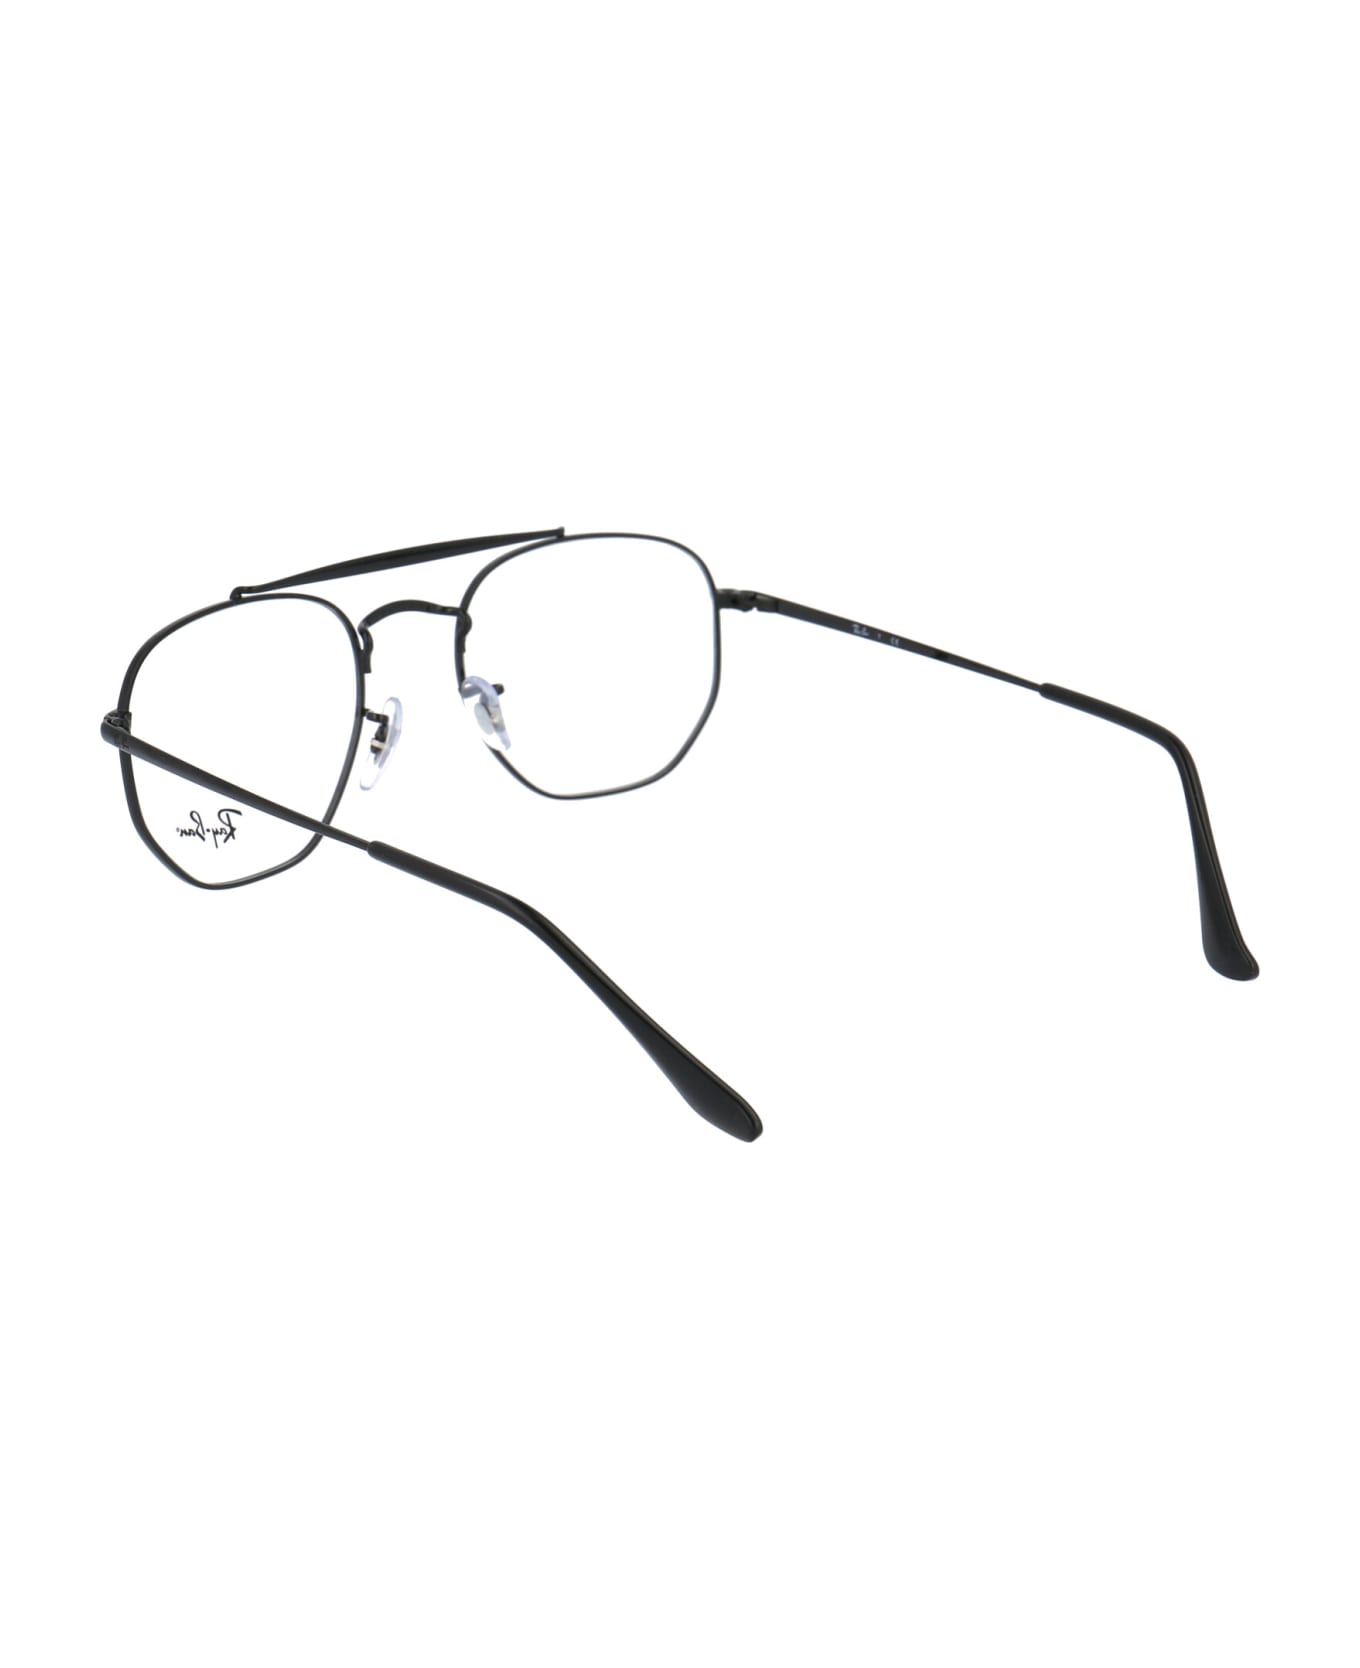 Ray-Ban The Marshal Glasses - 2509 BLACK